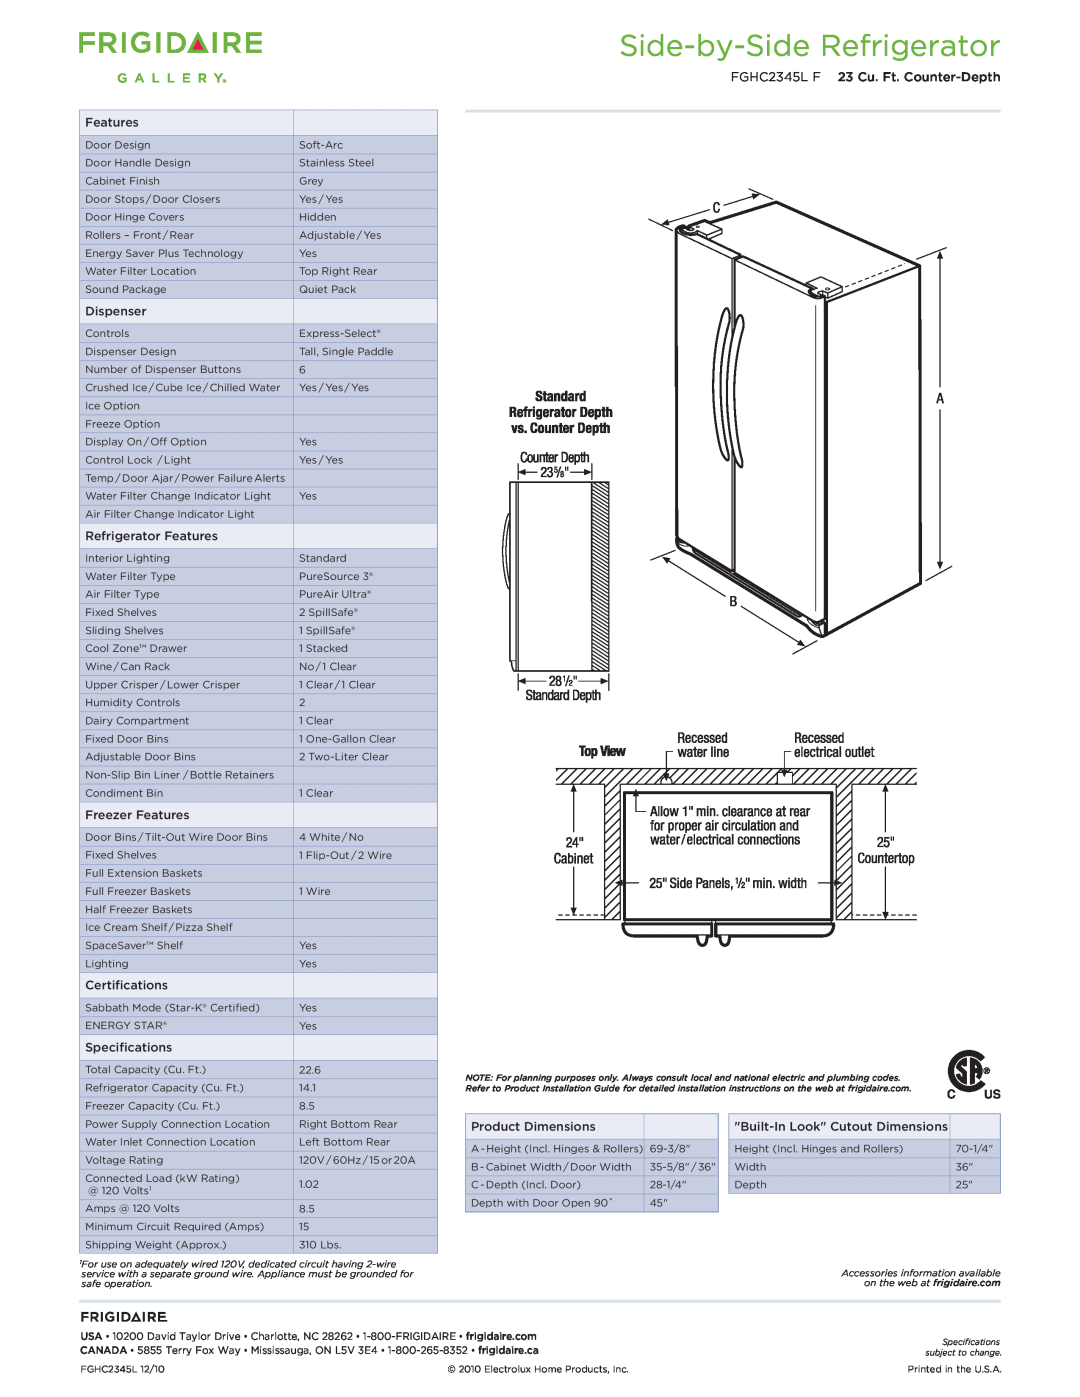 Frigidaire dimensions Side-by-SideRefrigerator, FGHC2345L F 23 Cu. Ft. Counter-Depth 